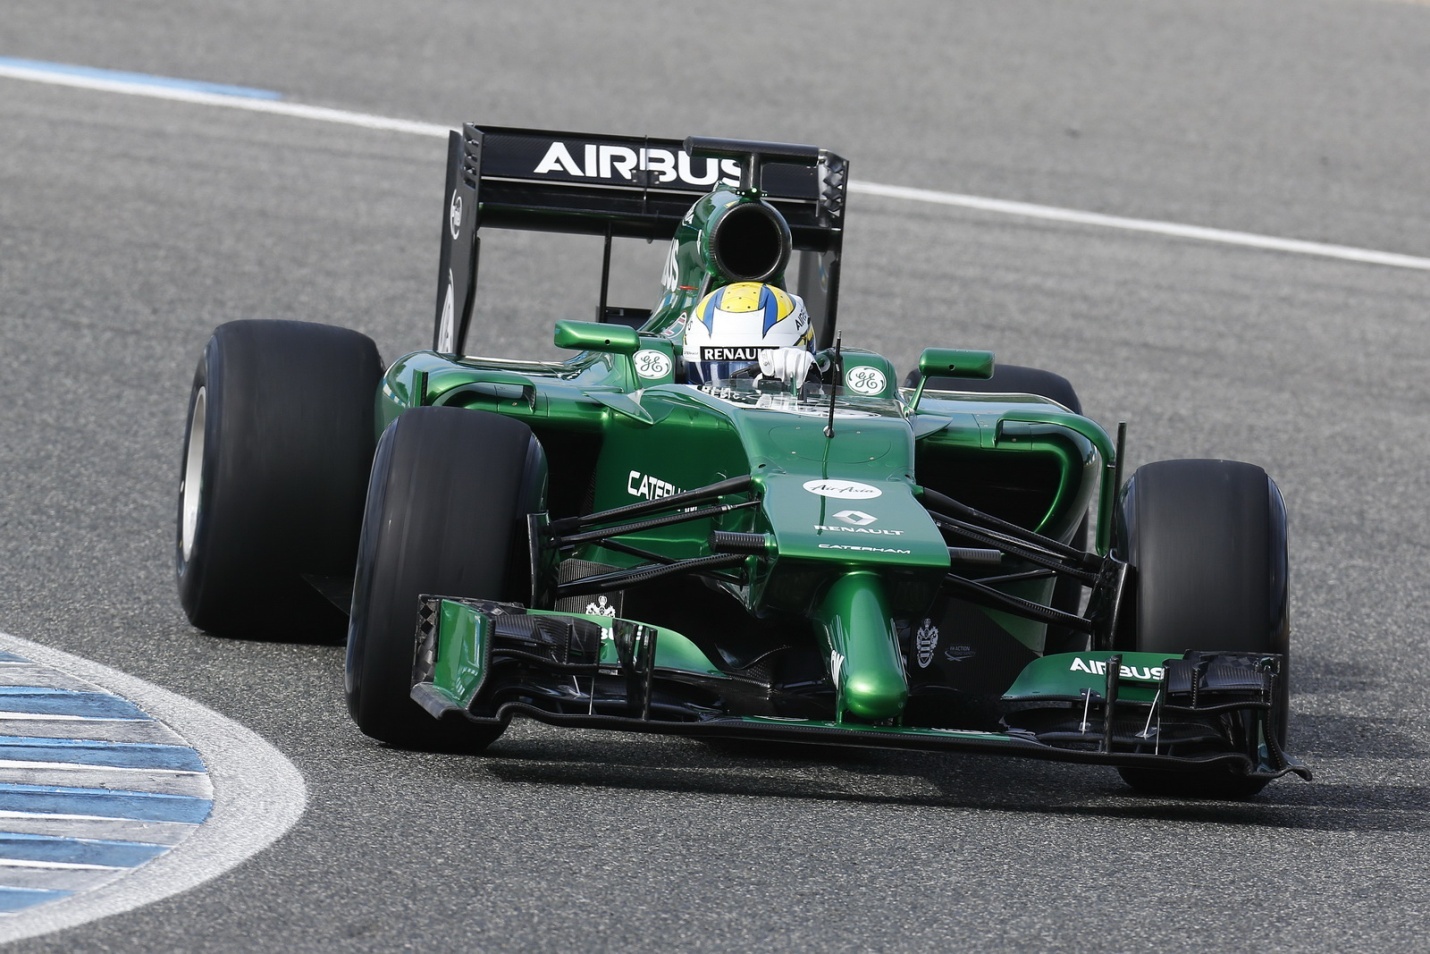 Marcus Ericsson racing